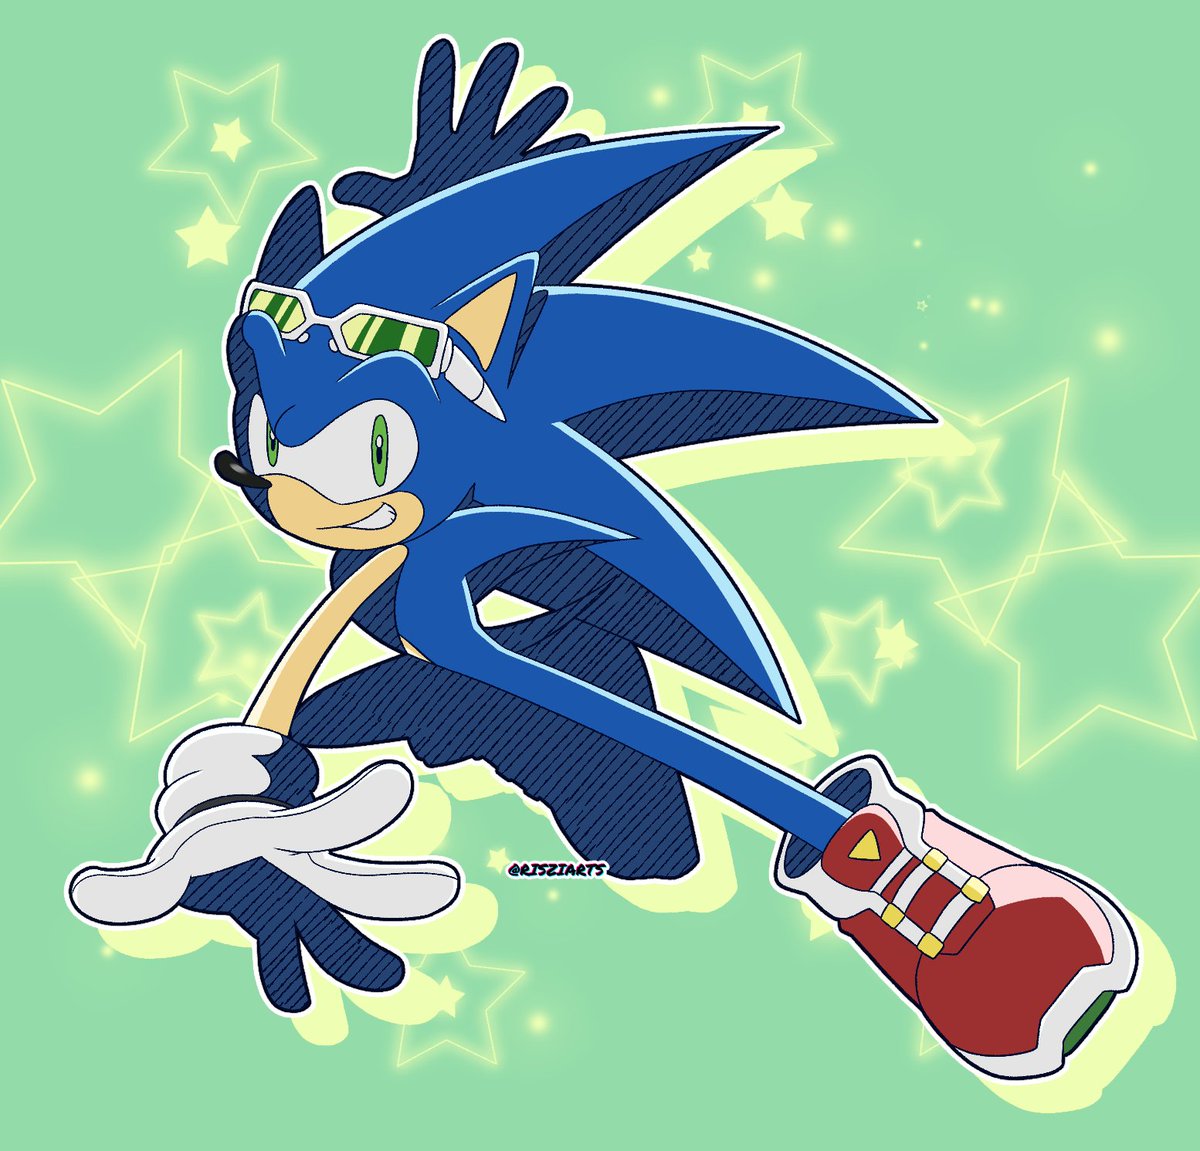 *Sonic Speed Riders starts playing*
#SonicRiders 
#SonicTheHedgehog